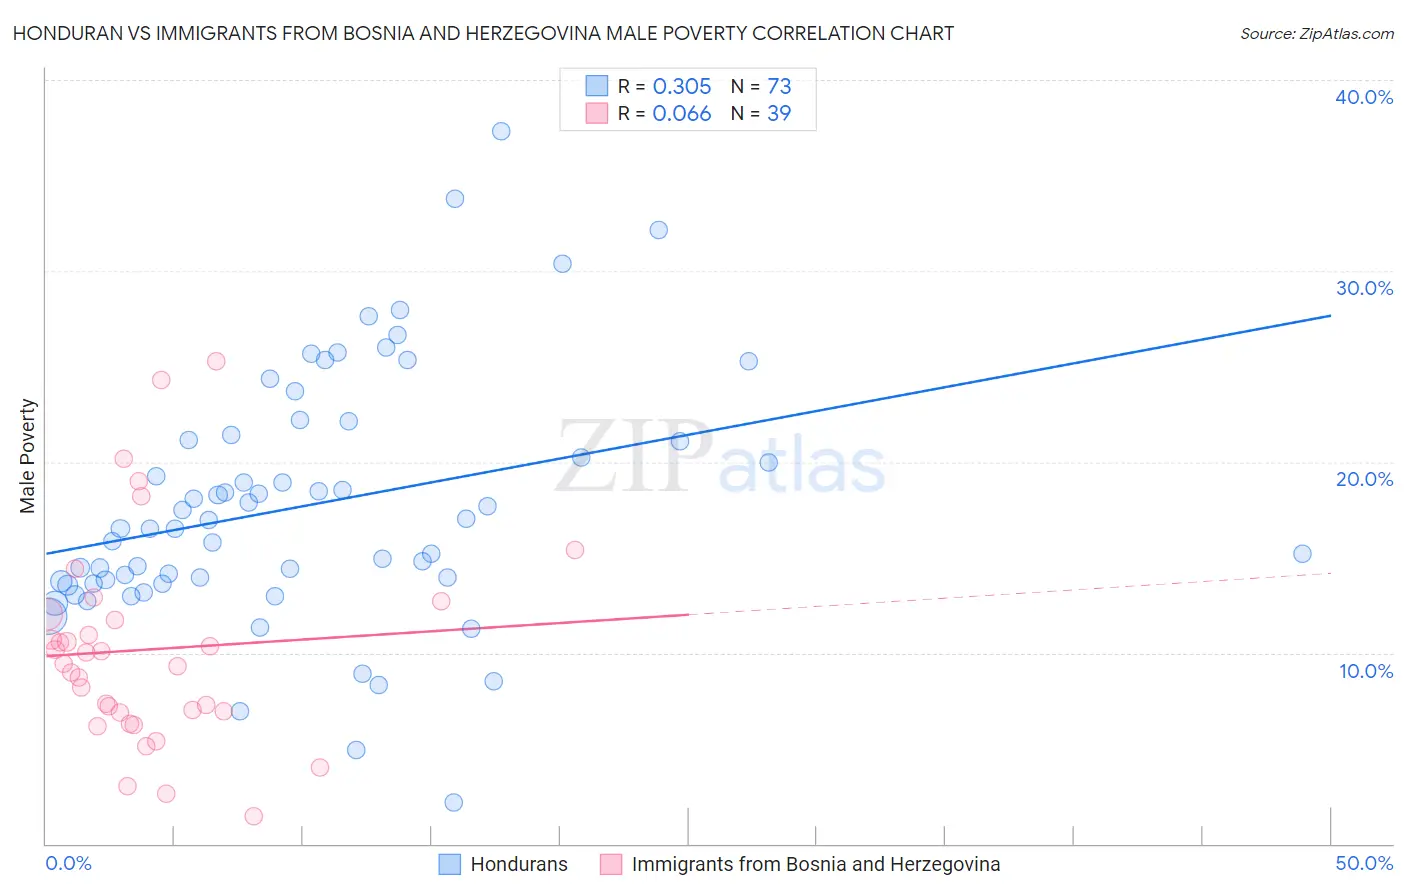 Honduran vs Immigrants from Bosnia and Herzegovina Male Poverty